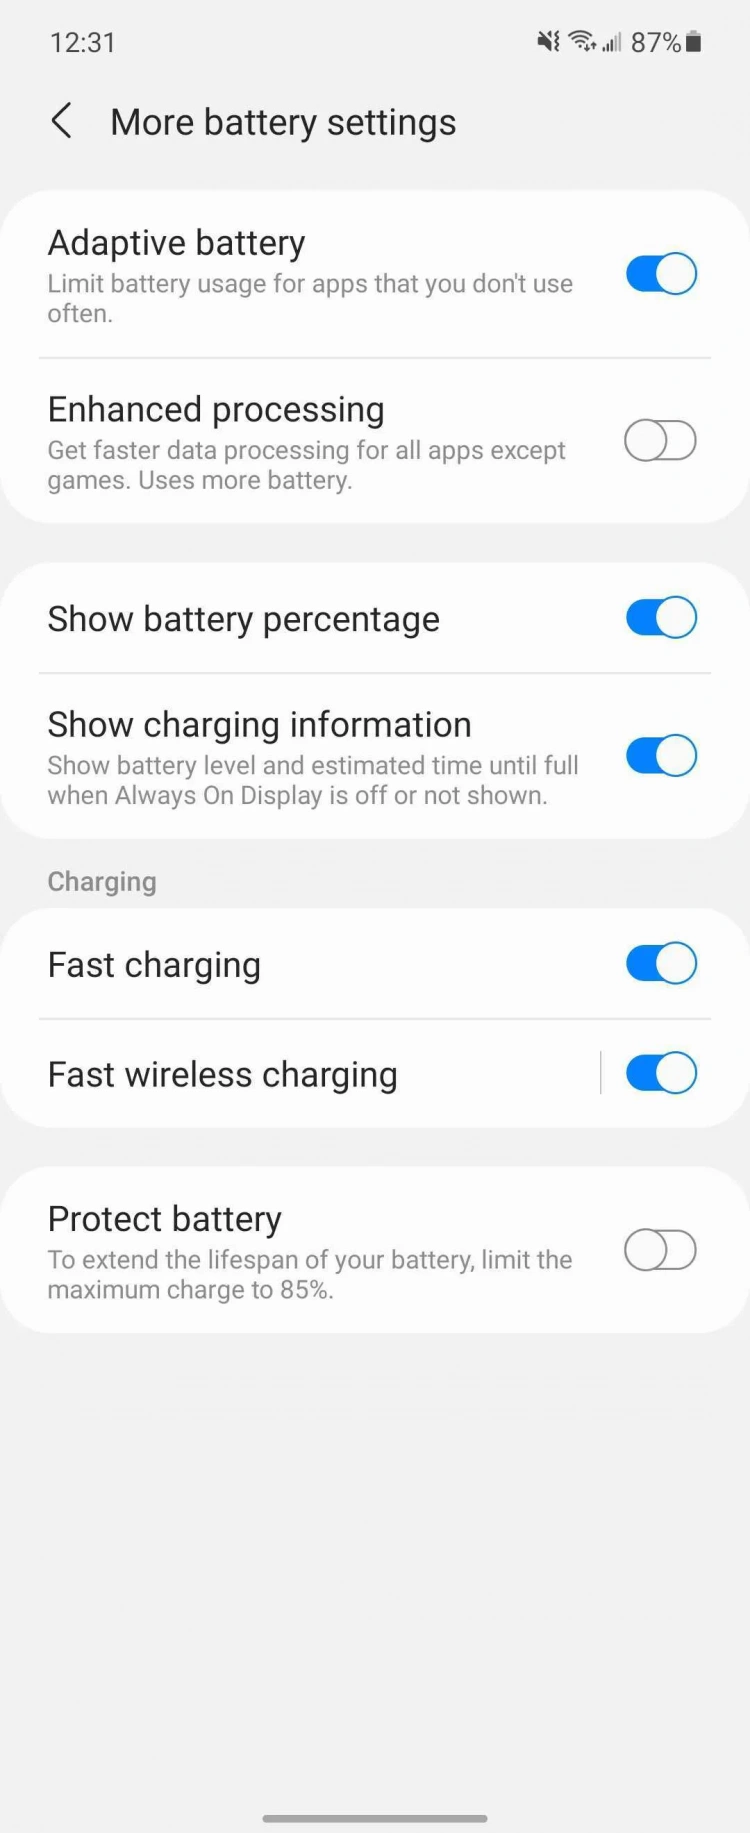 Ochrona baterii w Galaxy Z Flip3 5G
Źródło: samsung.com via theverge.com